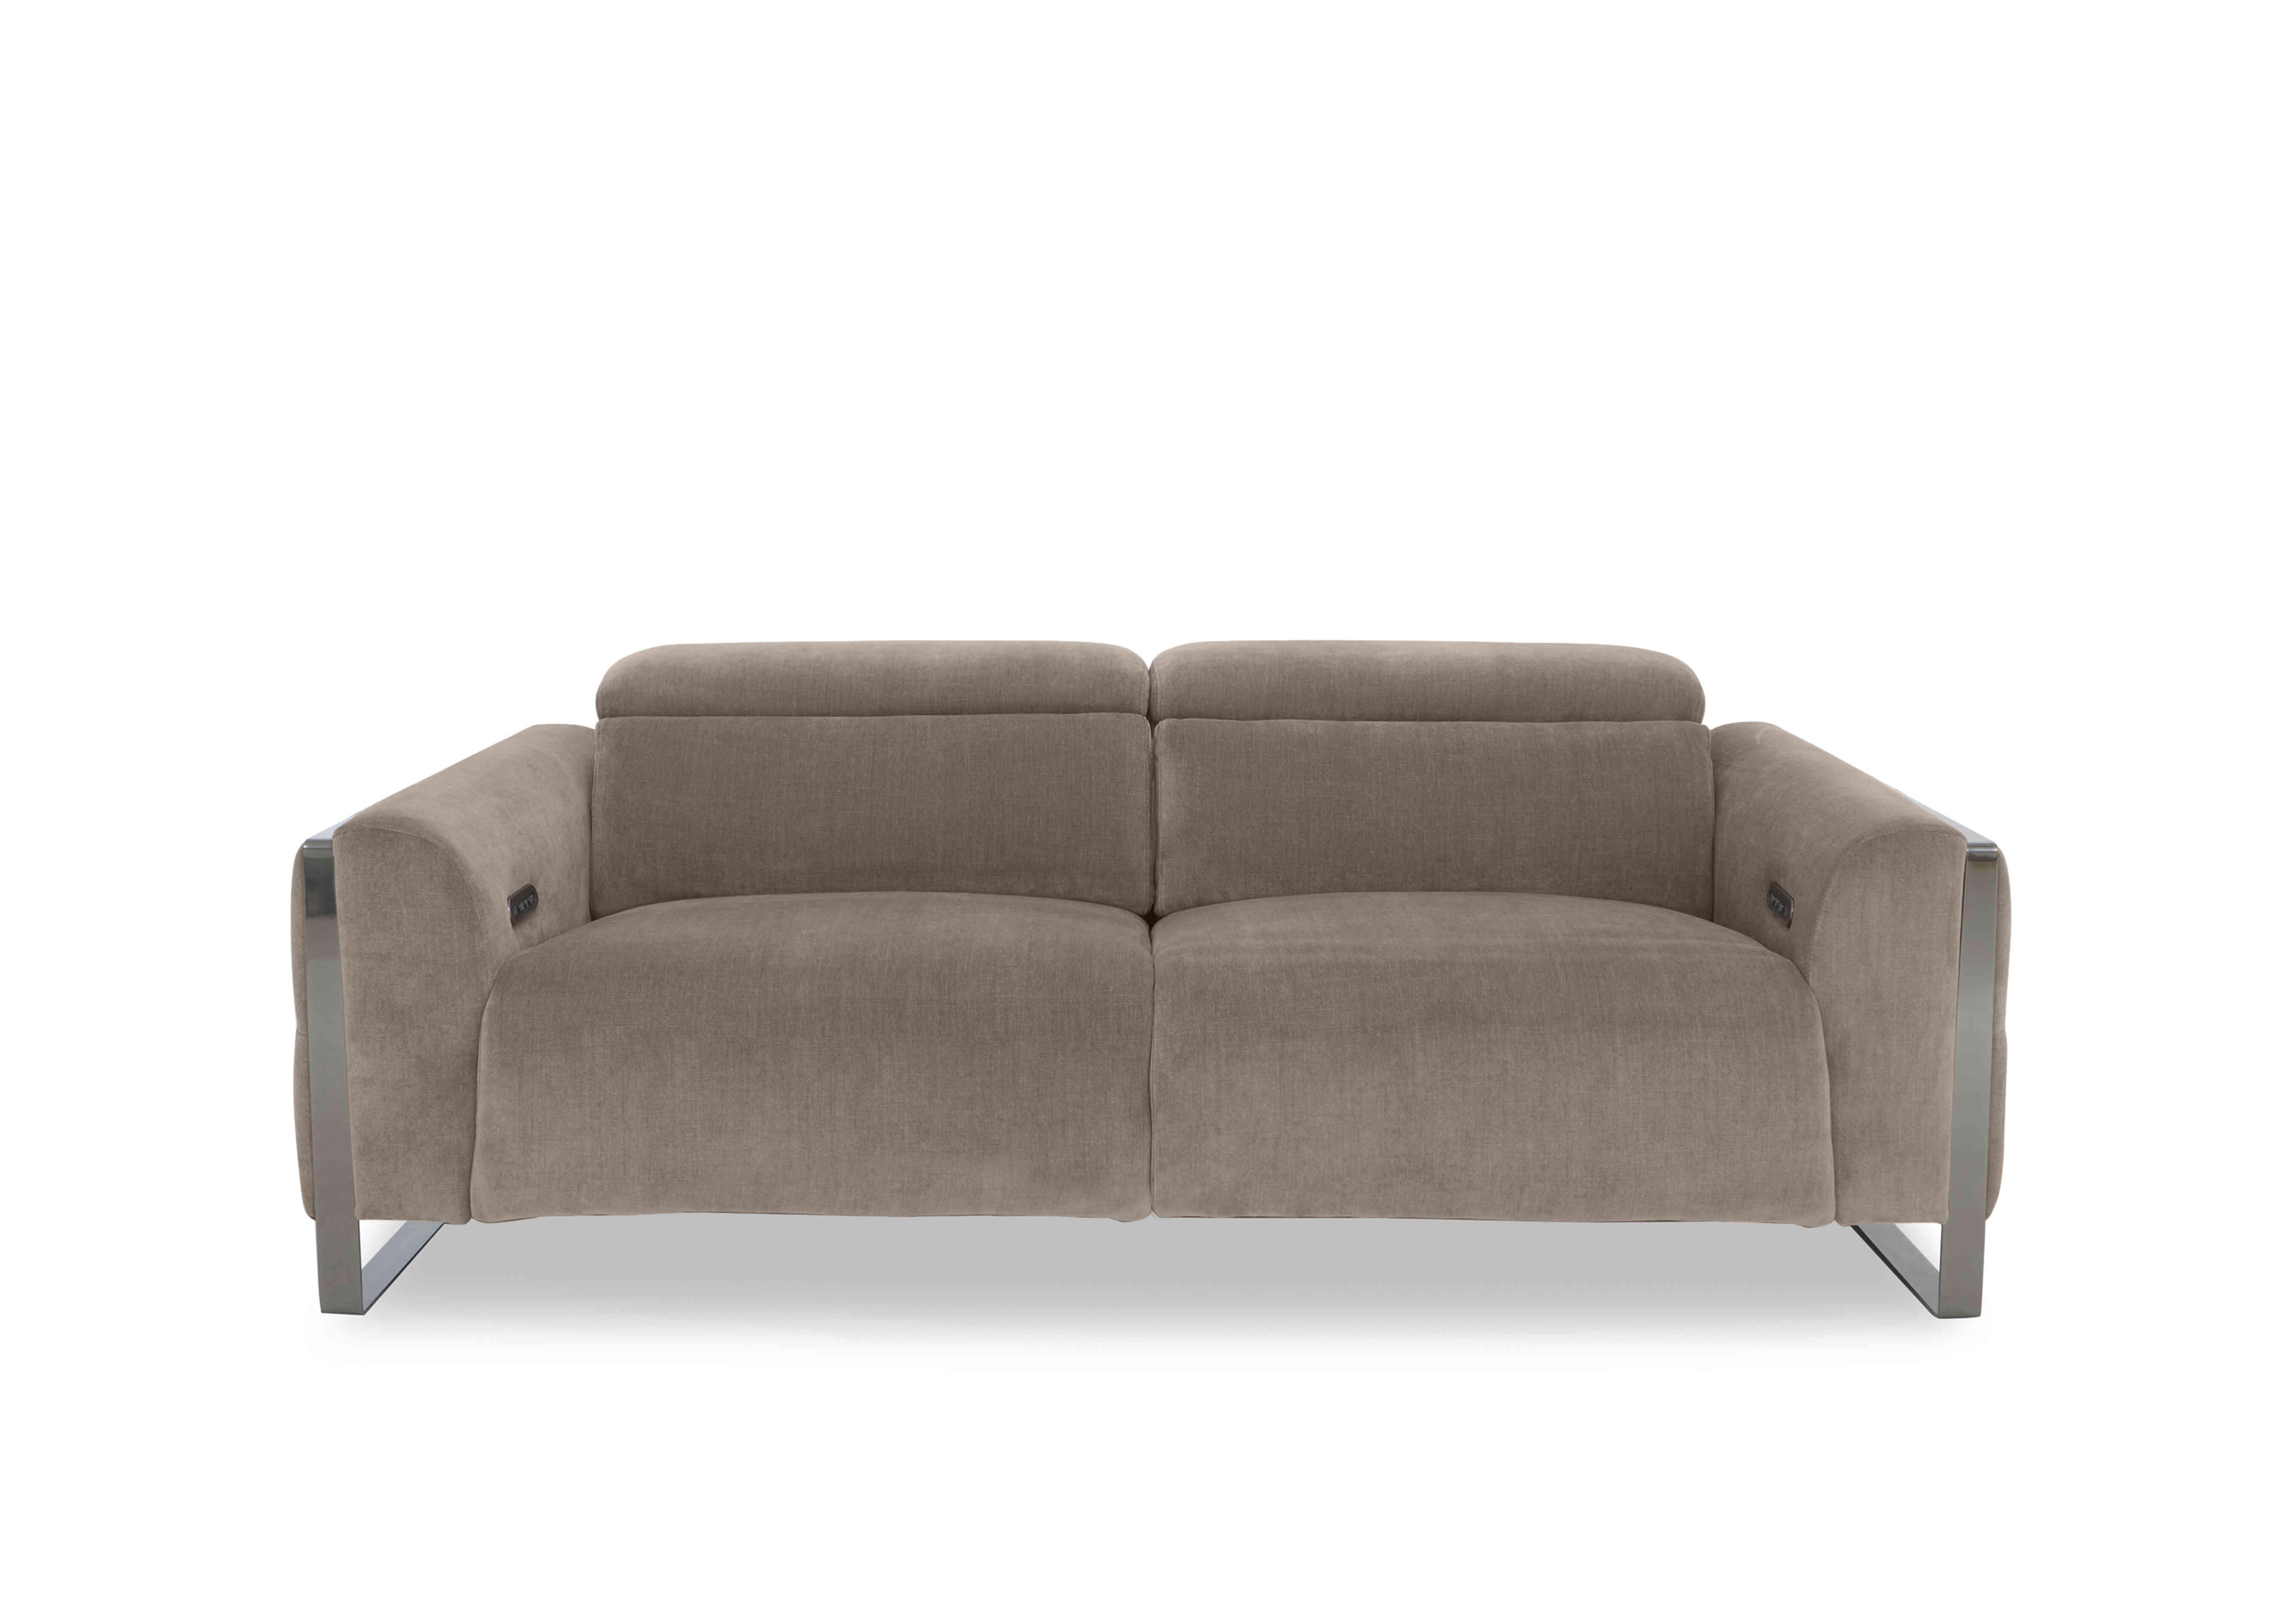 Gisella Fabric 3 Seater Sofa in Manhattan Nutmeg 58005 on Furniture Village